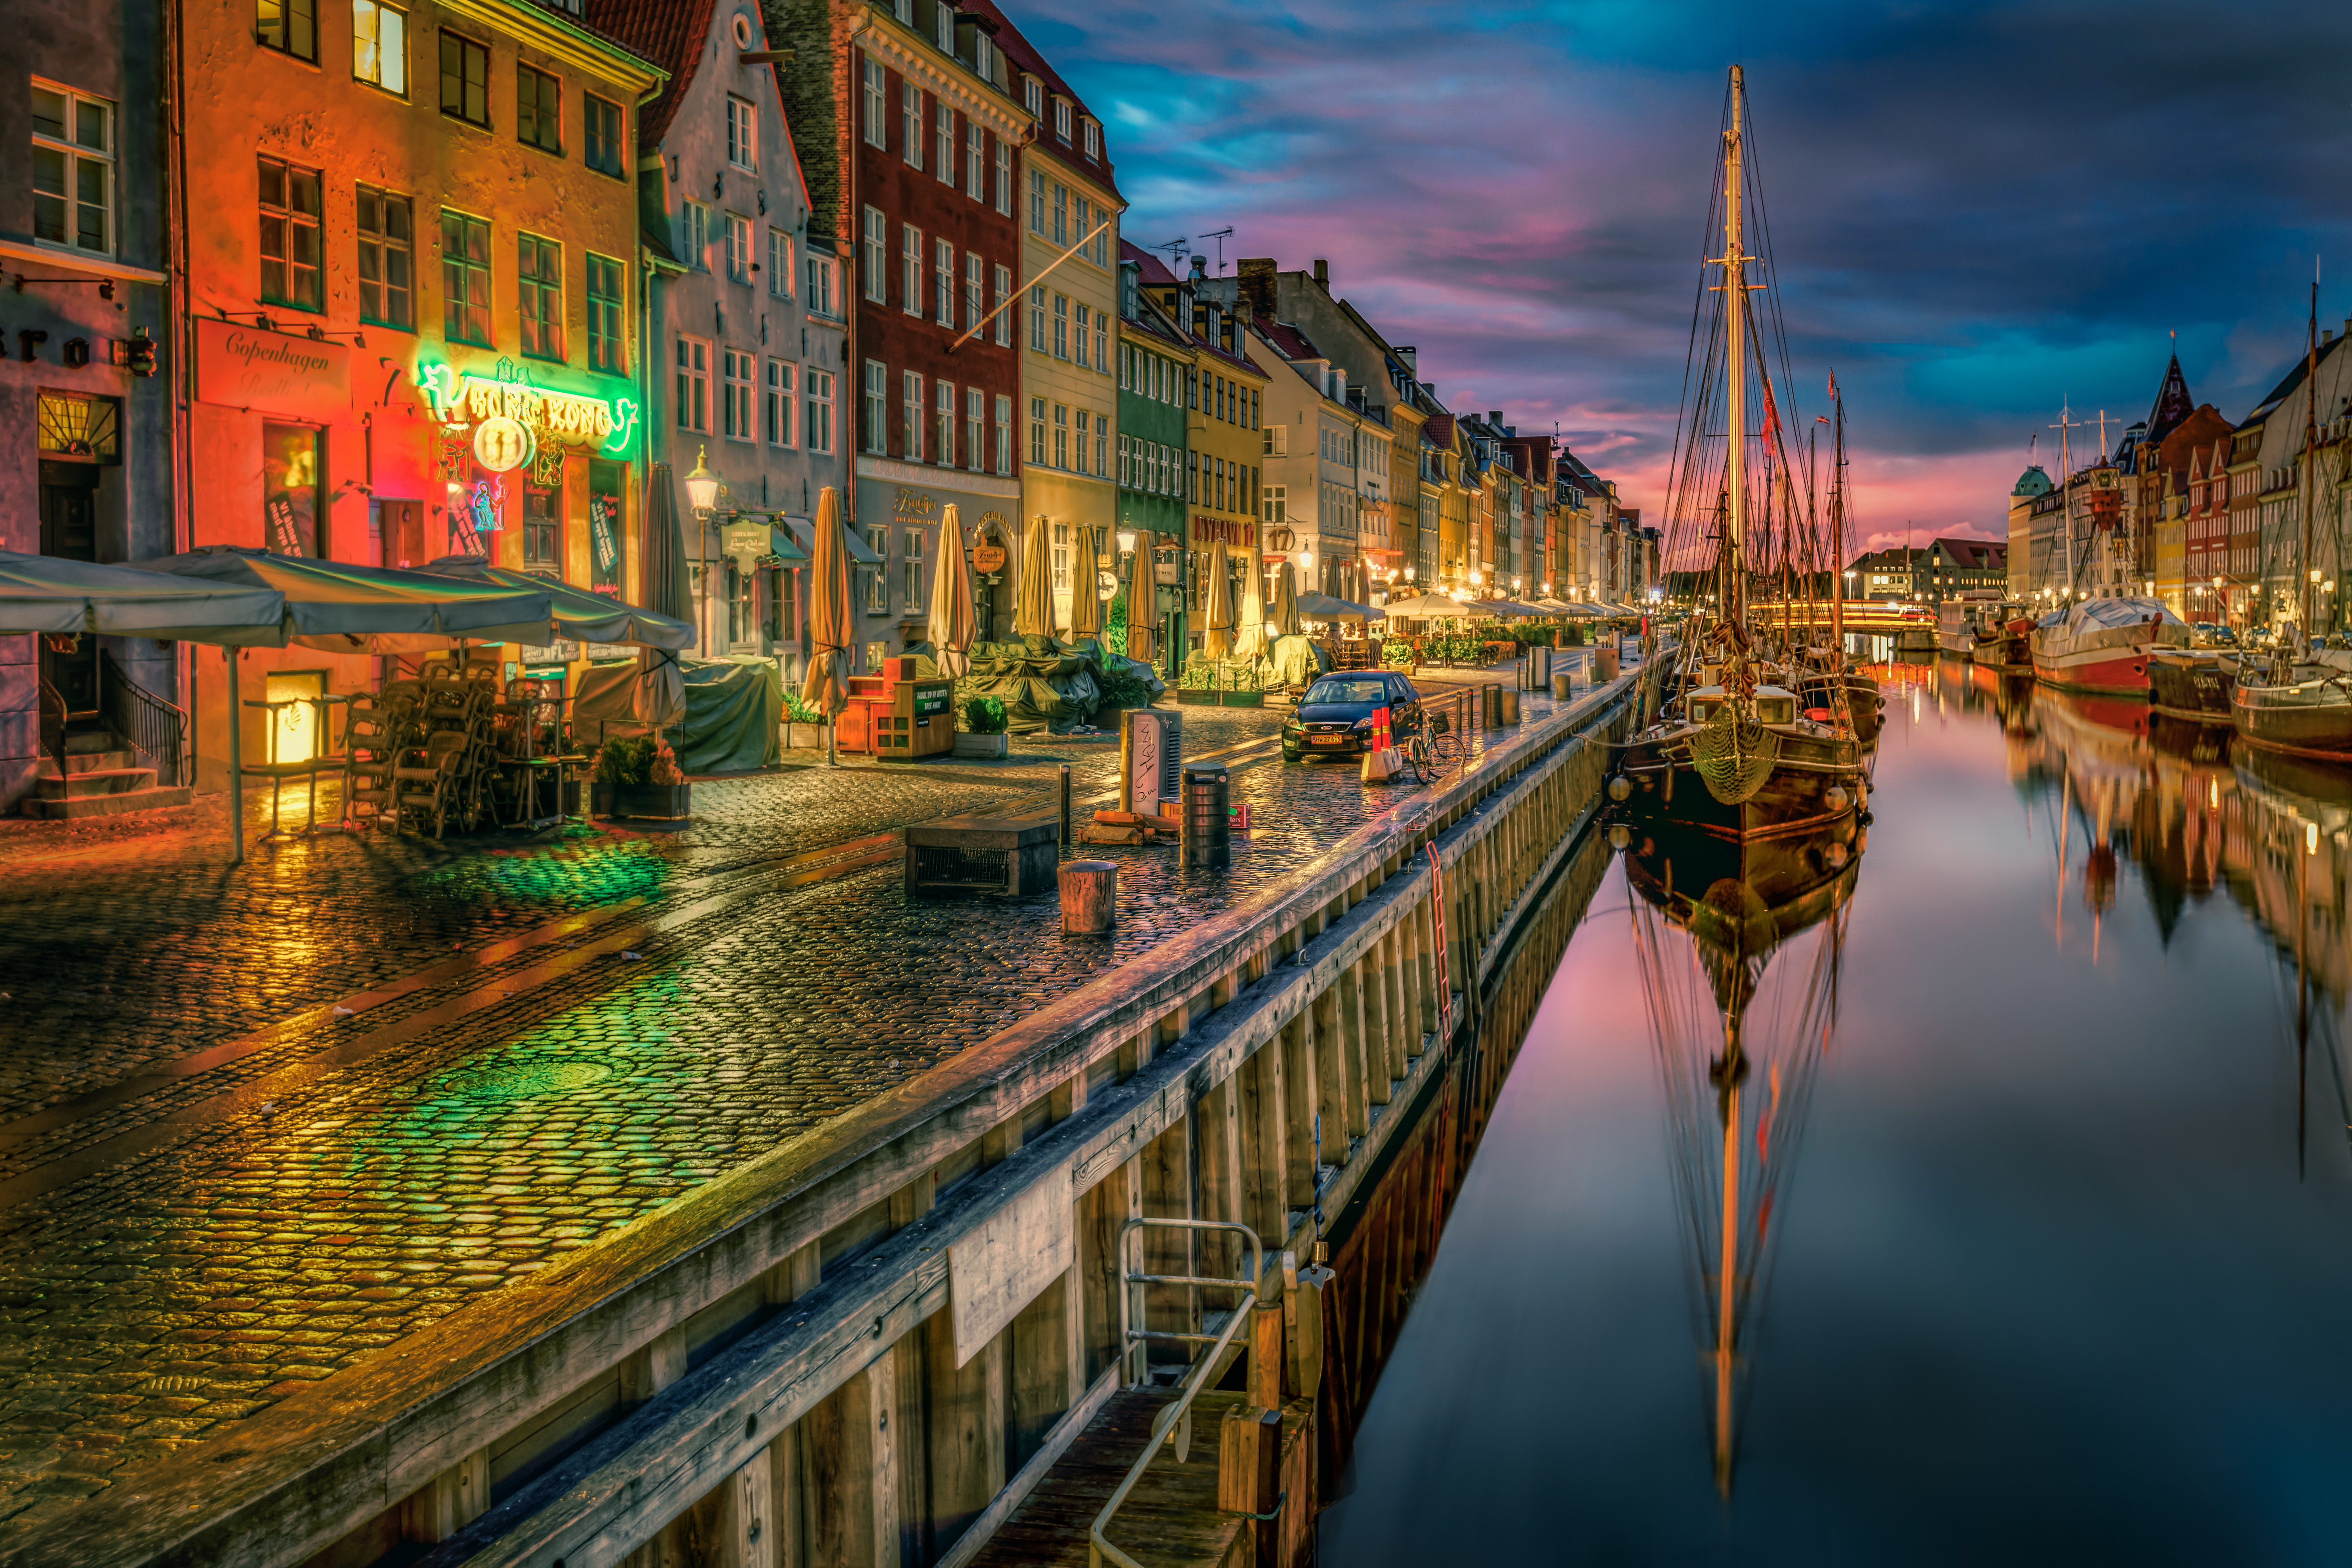 Copenhagen Denmark Boat Canal House Town Building Evening Night 6000x4000